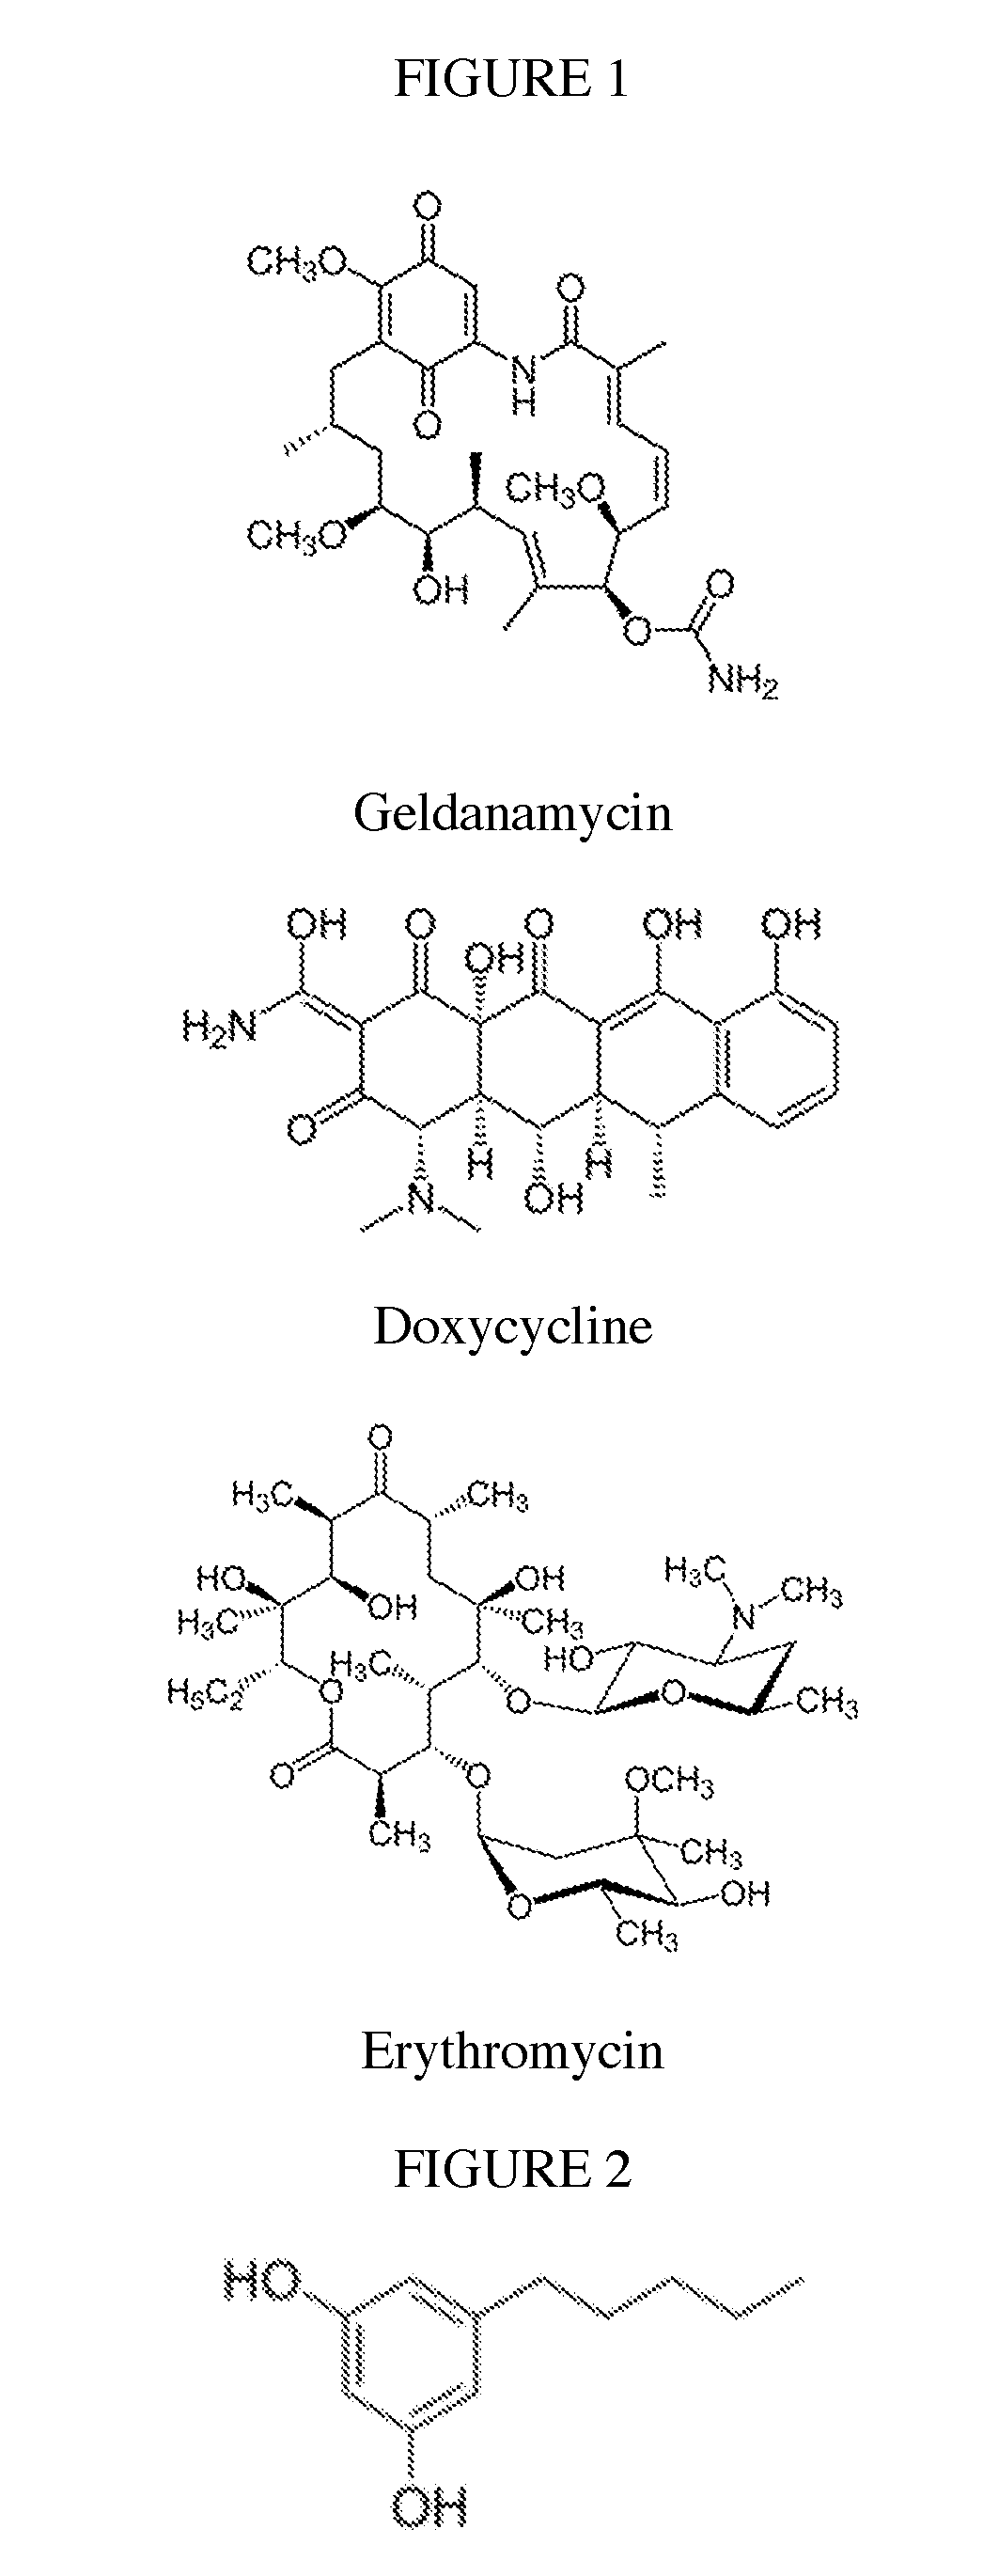 Biosynthesis of polyketides